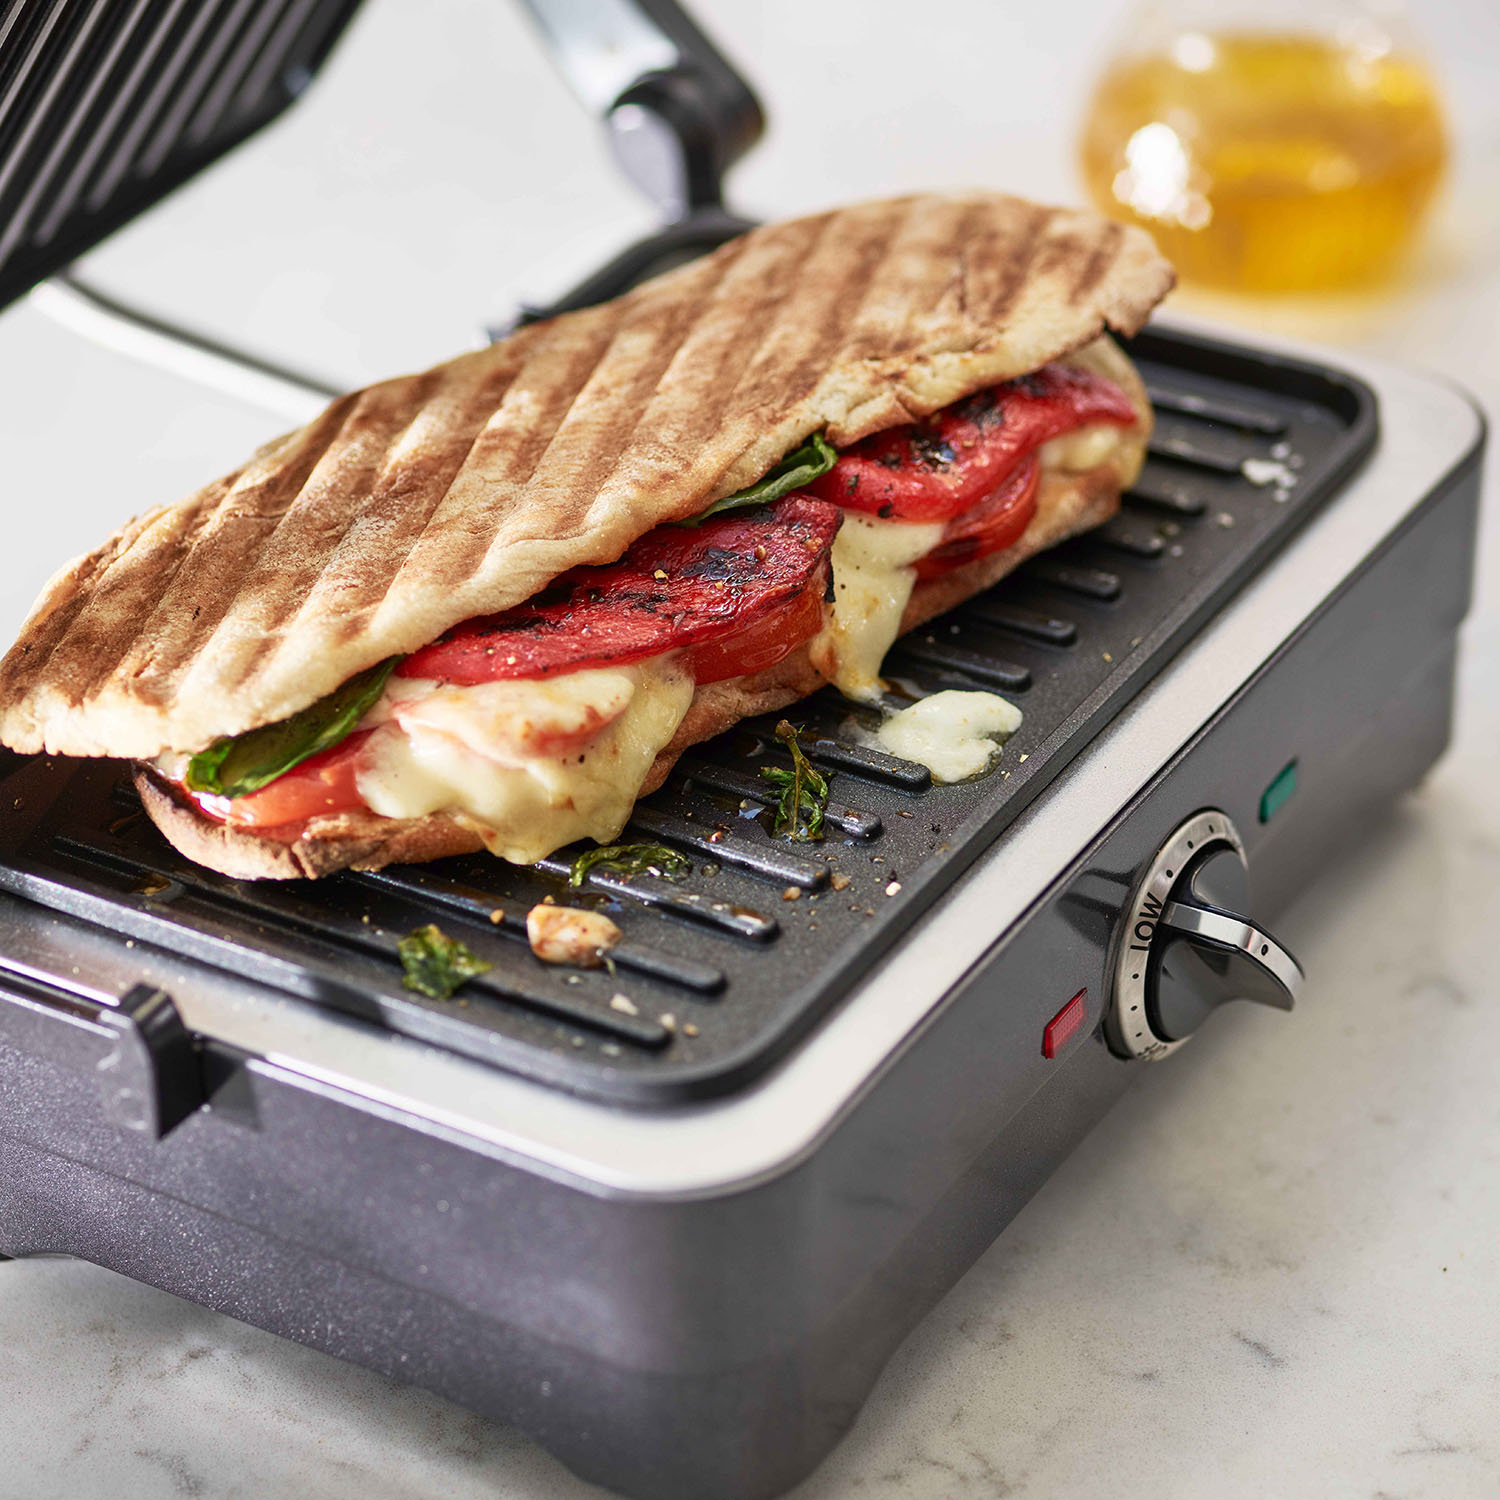 11 Cuisinart sandwich grill recipes ideas